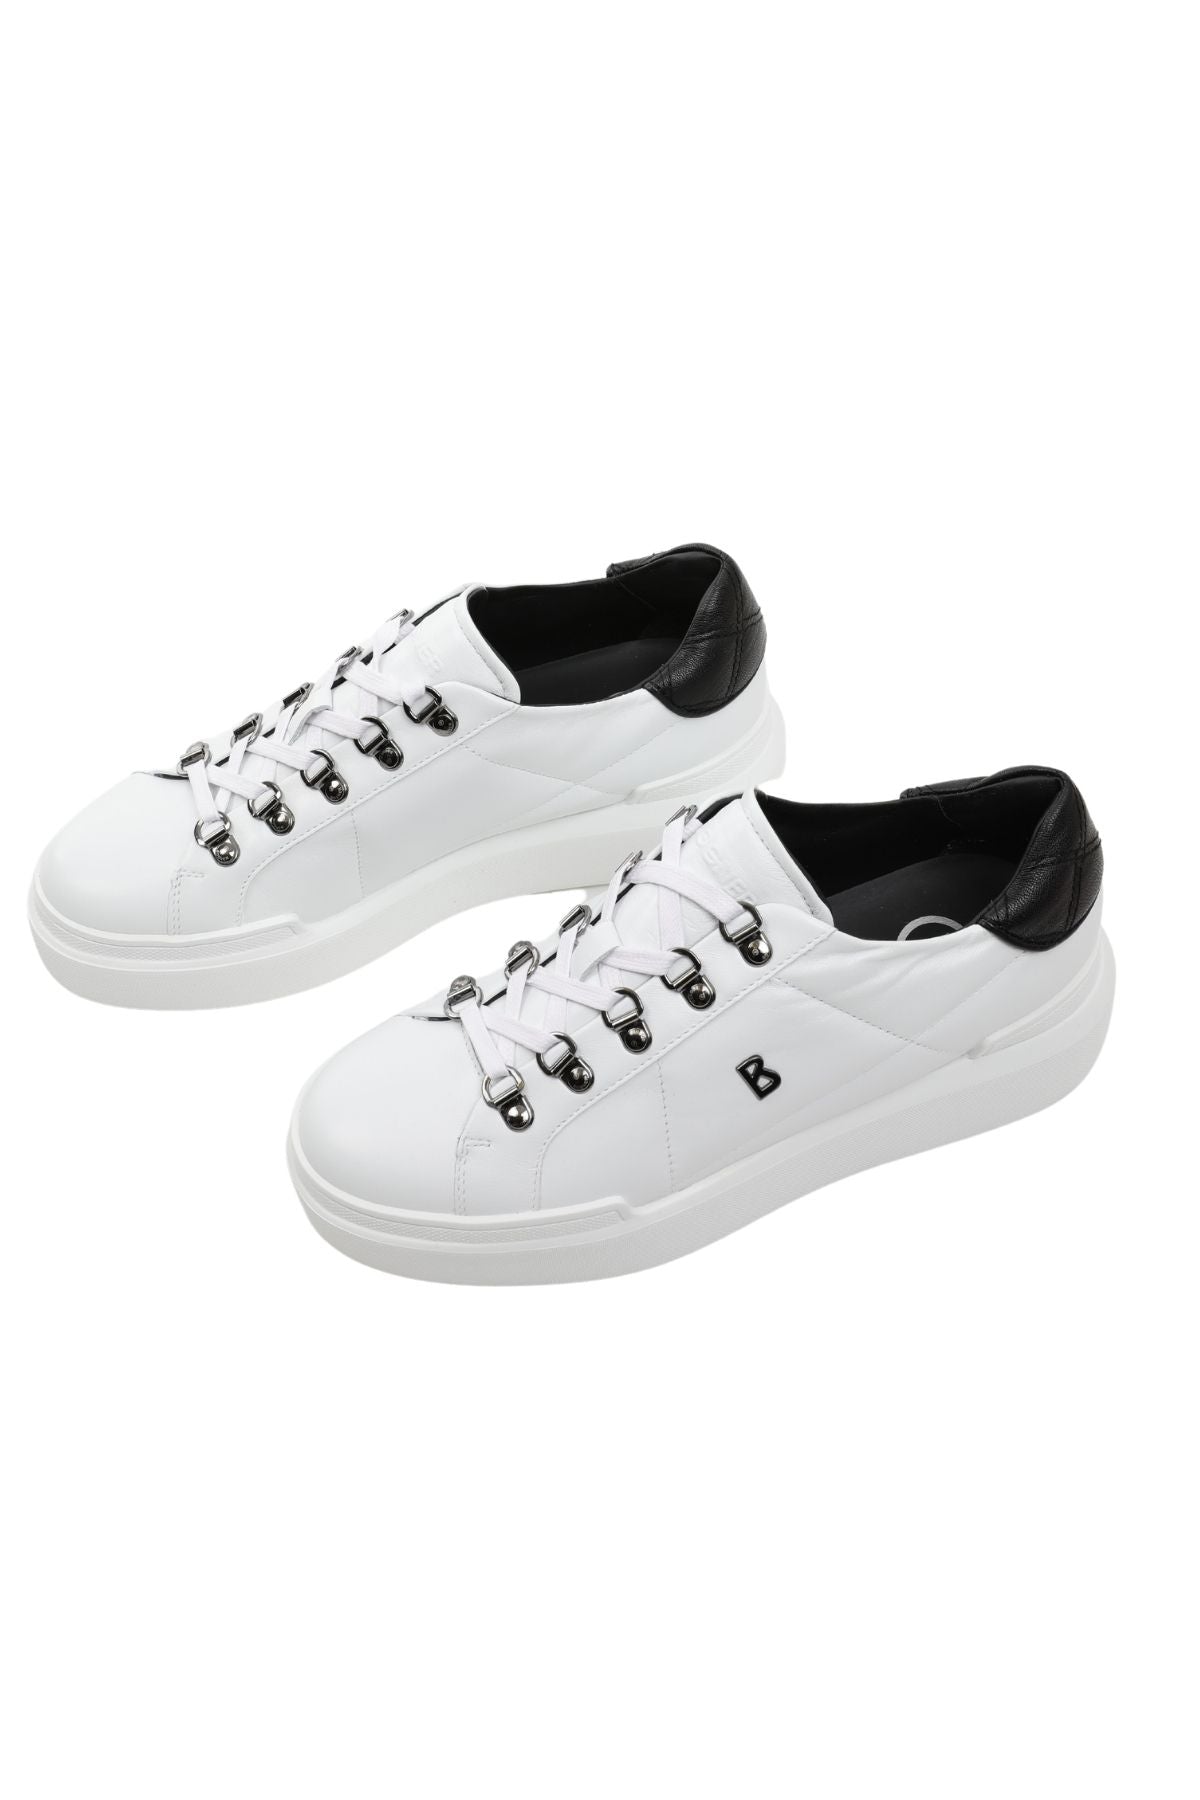 Bogner Hollywood Deri Kapitone Sneaker Ayakkabı-Libas Trendy Fashion Store